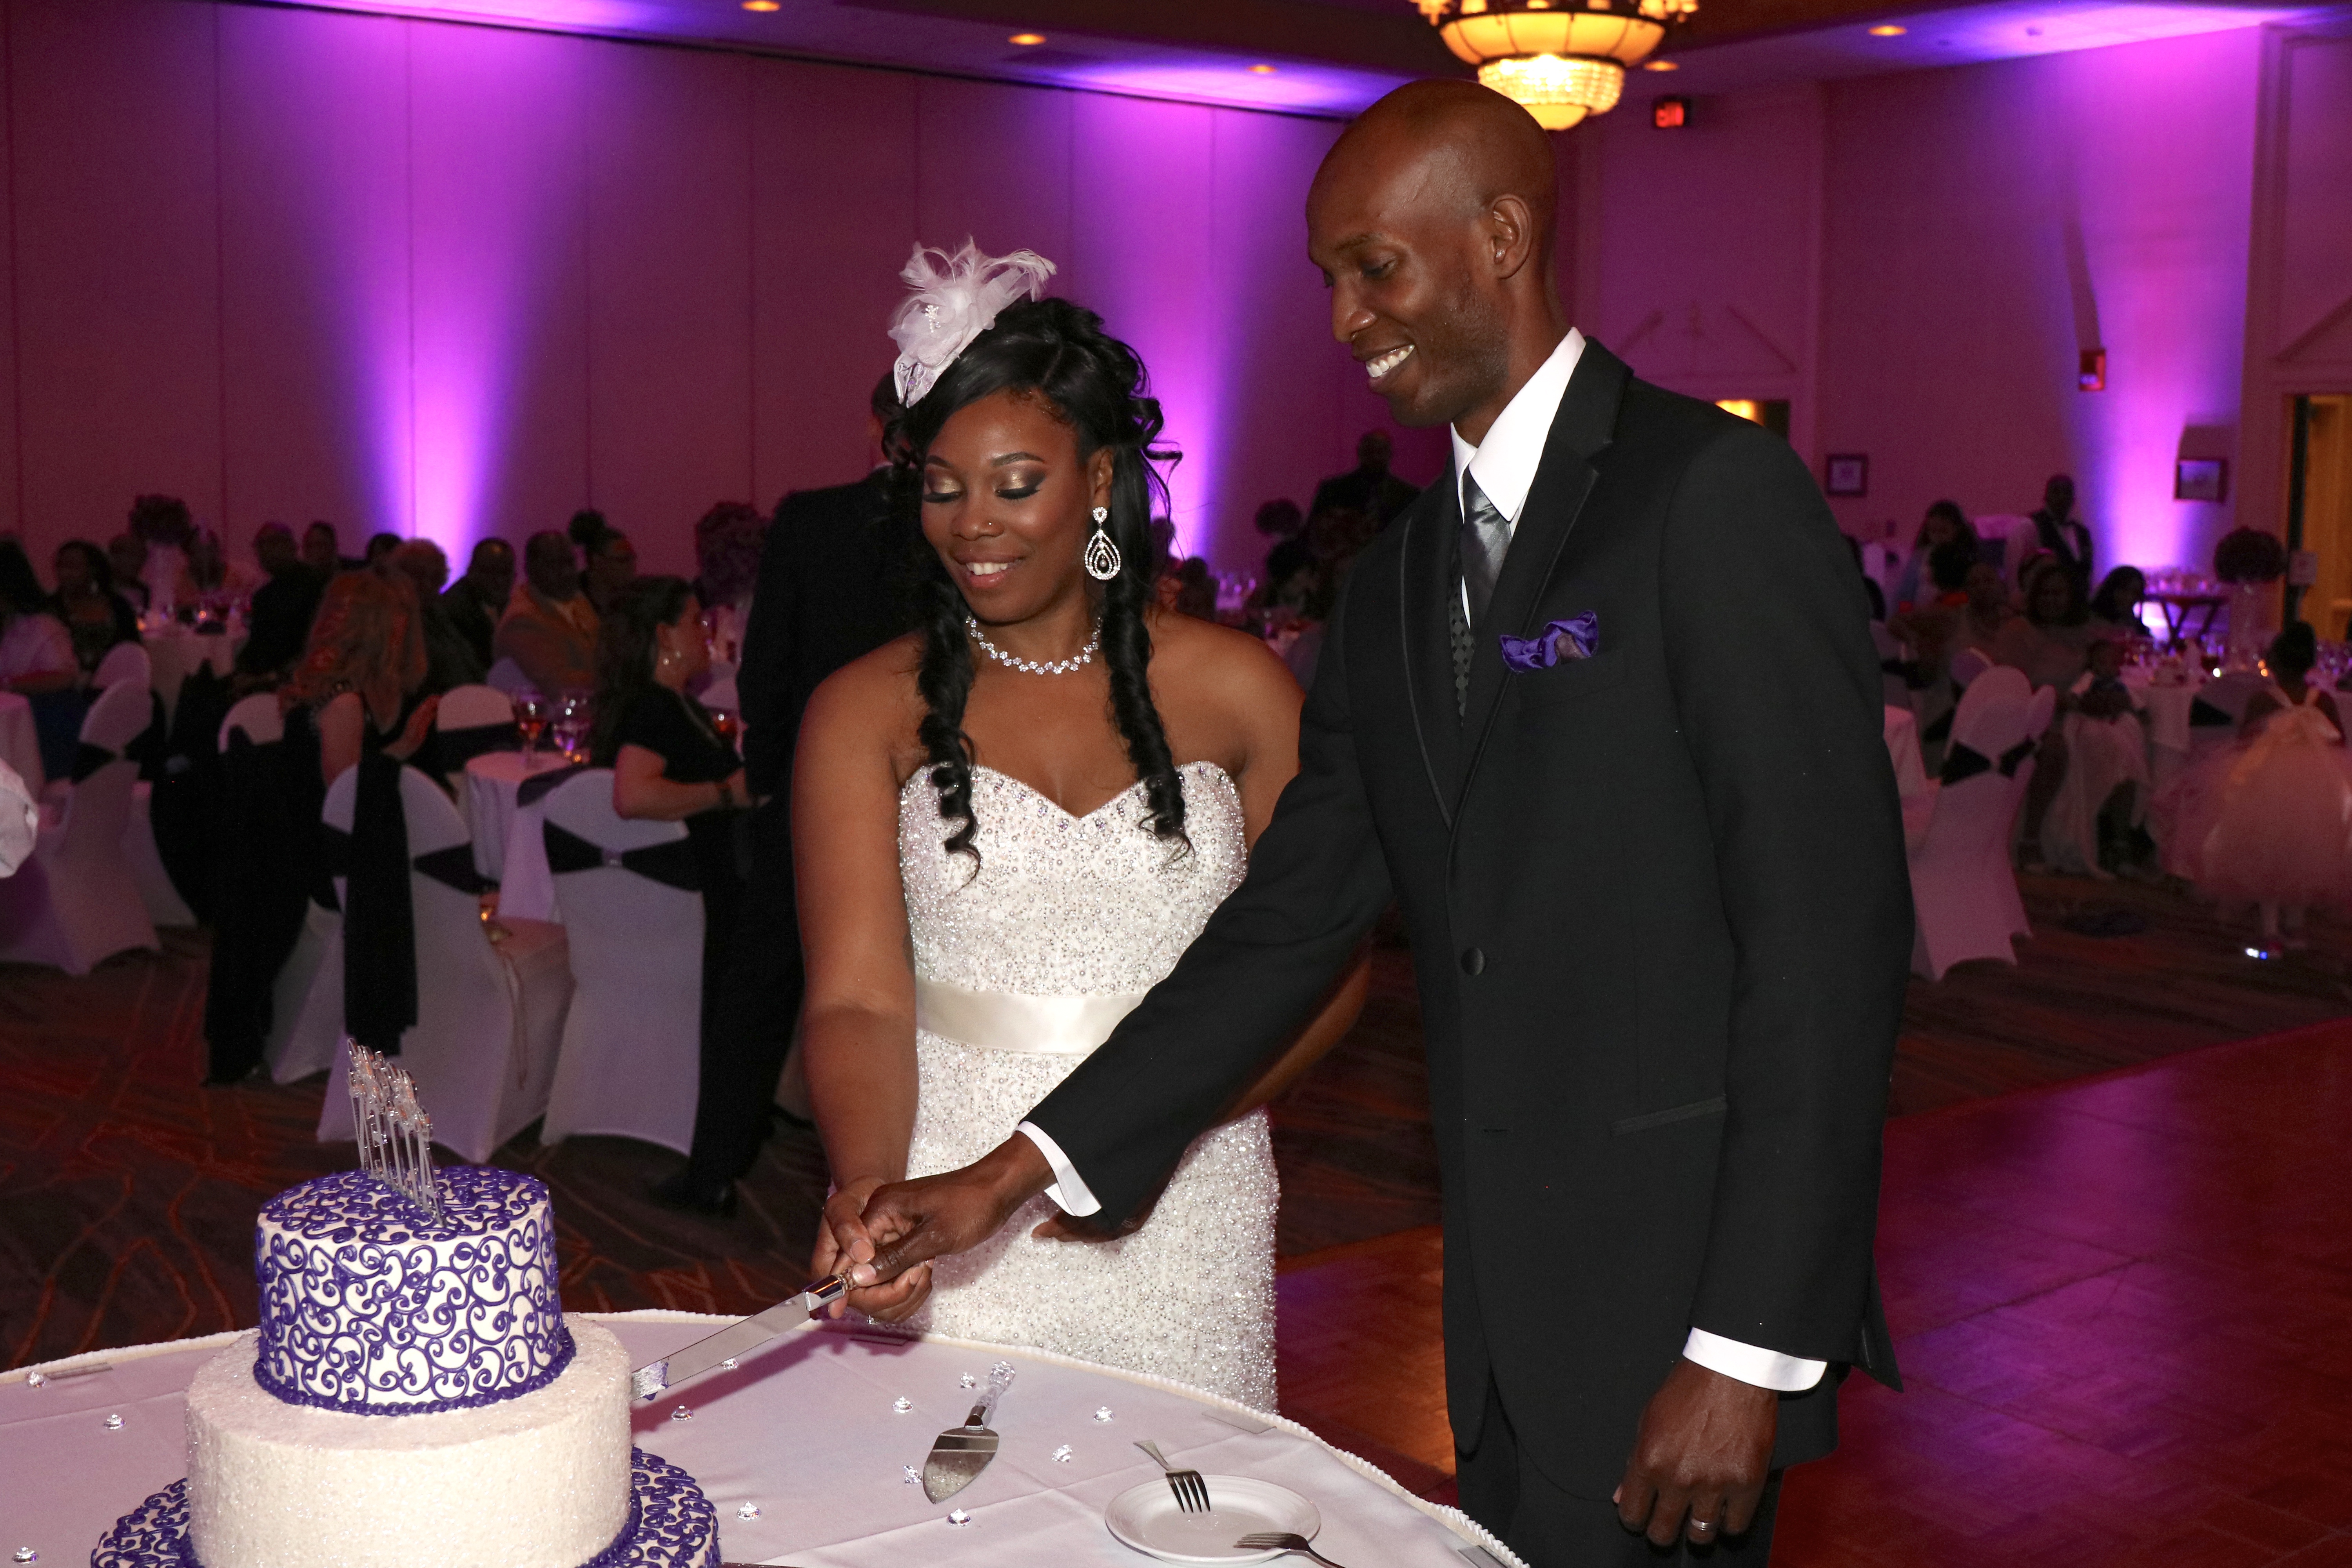 Wedding couple cutting cake with purple wedding lighting behind them